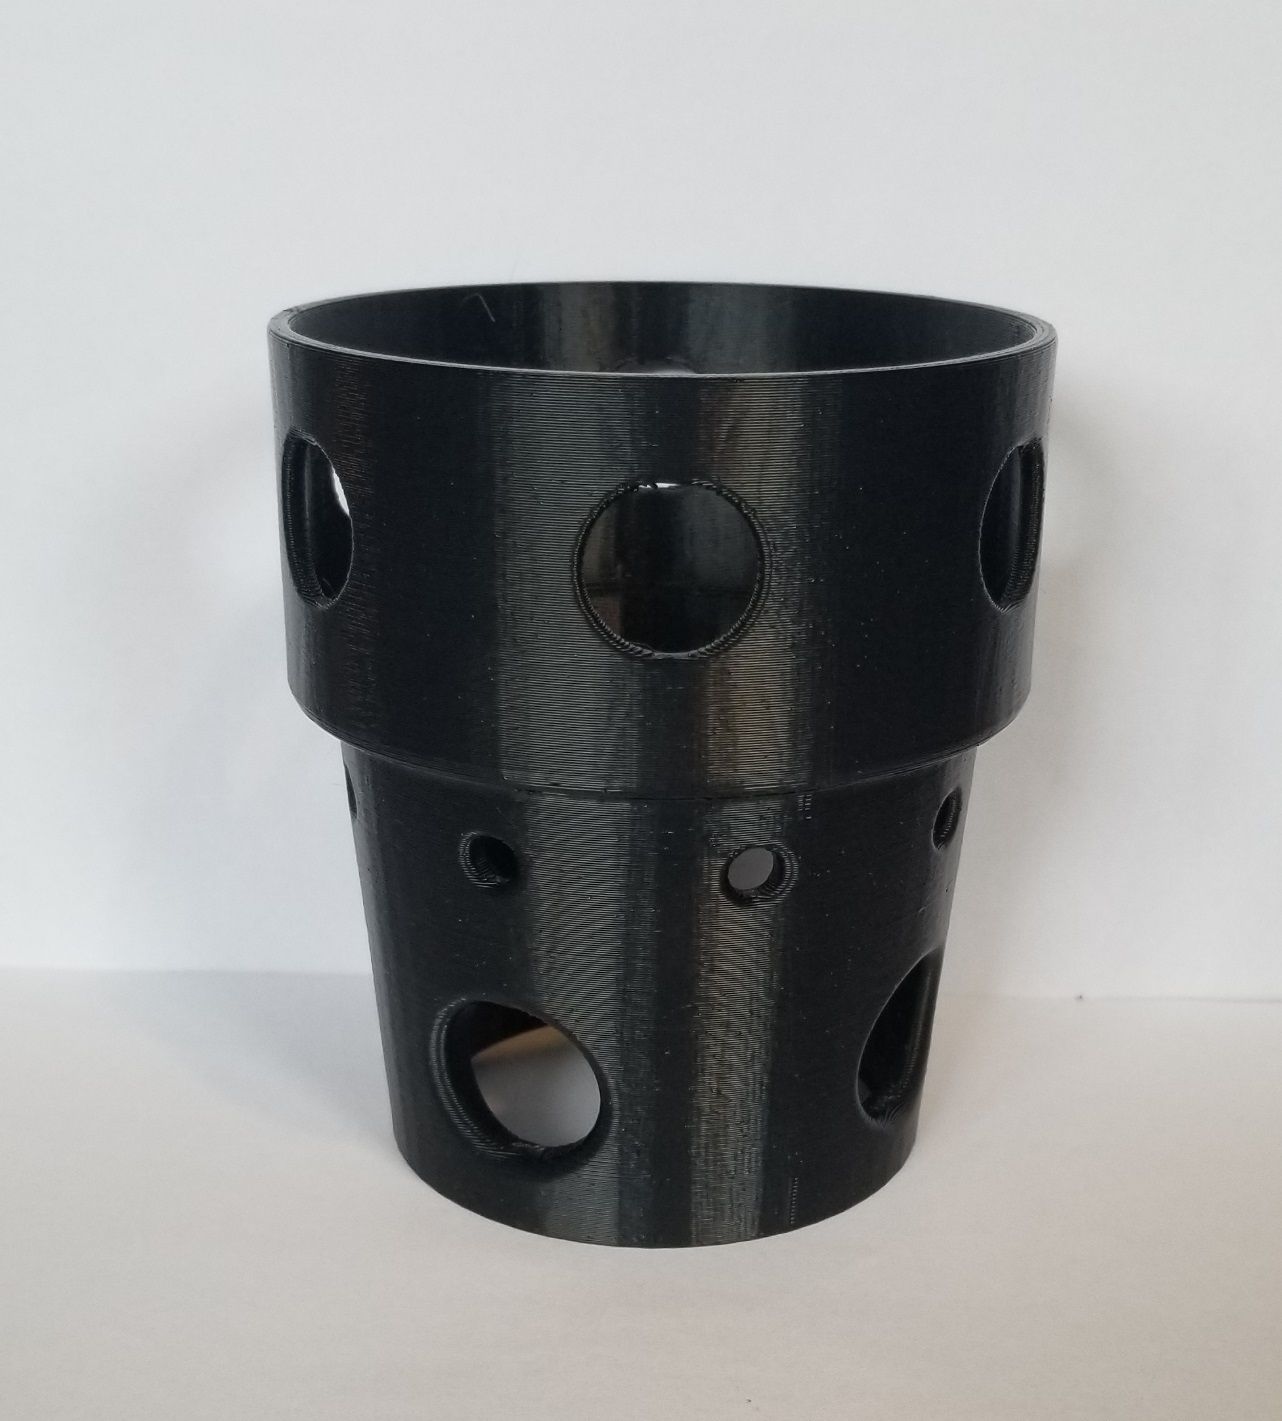 20200723_121710.jpg Download free STL file Hydroflask car cupholder • 3D print object, 3DPrintersaur